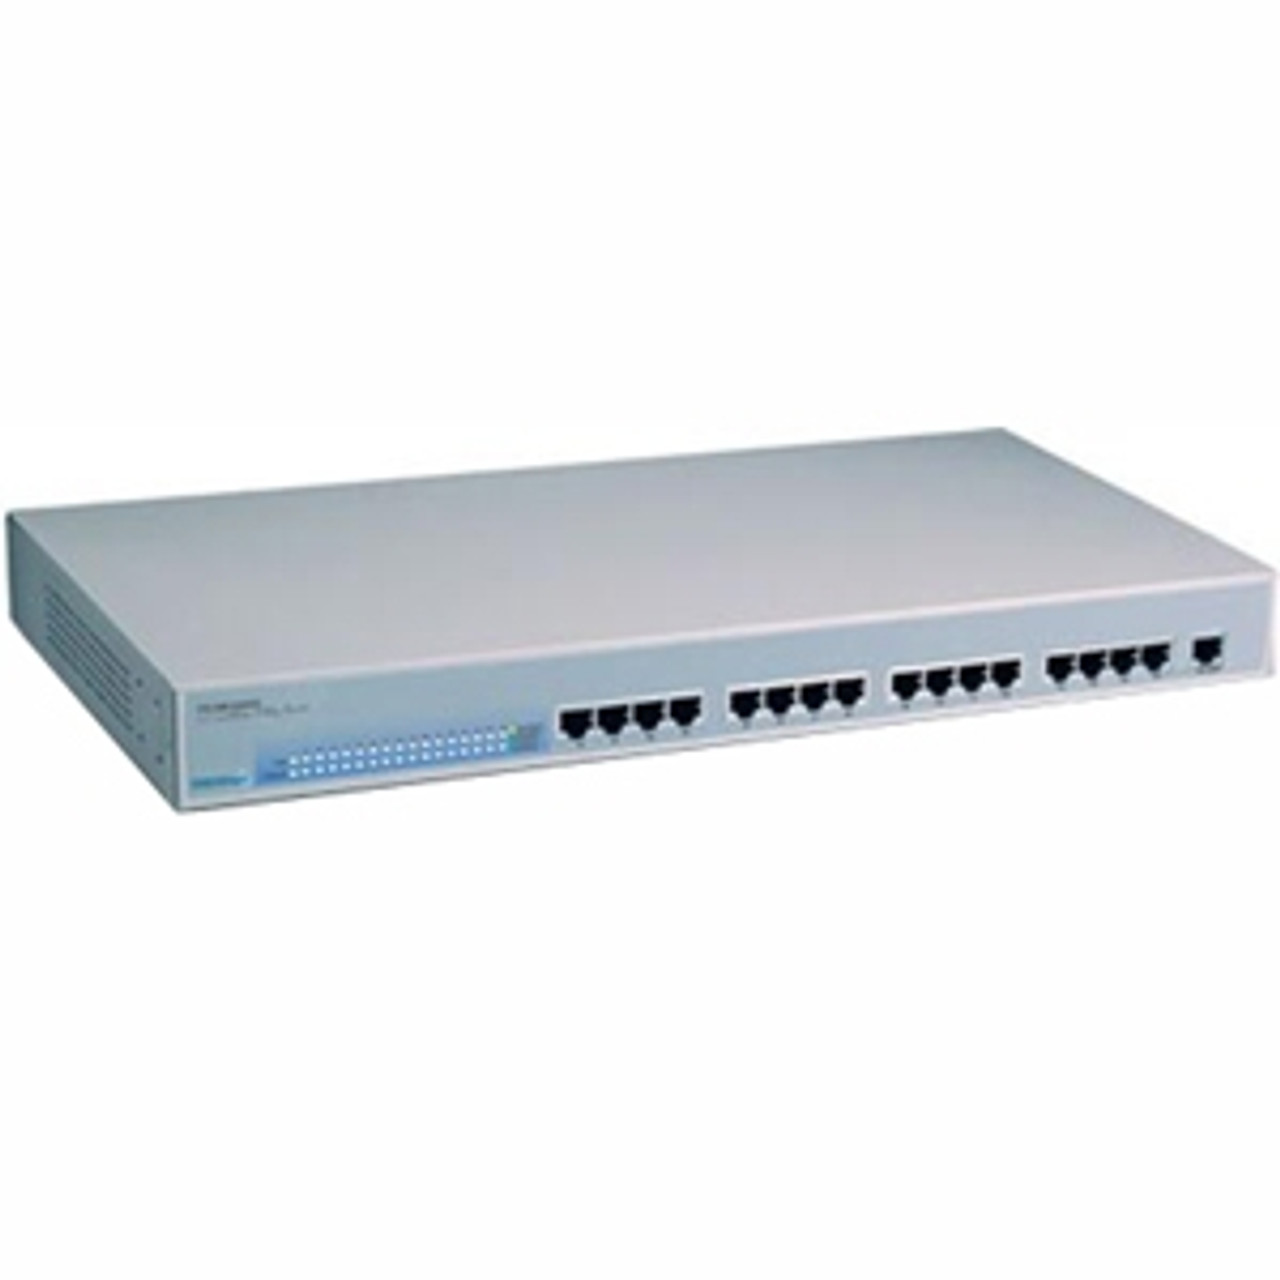 TE100-S1616 TRENDnet Fast Ethernet N-Way Switch (Refurbished)